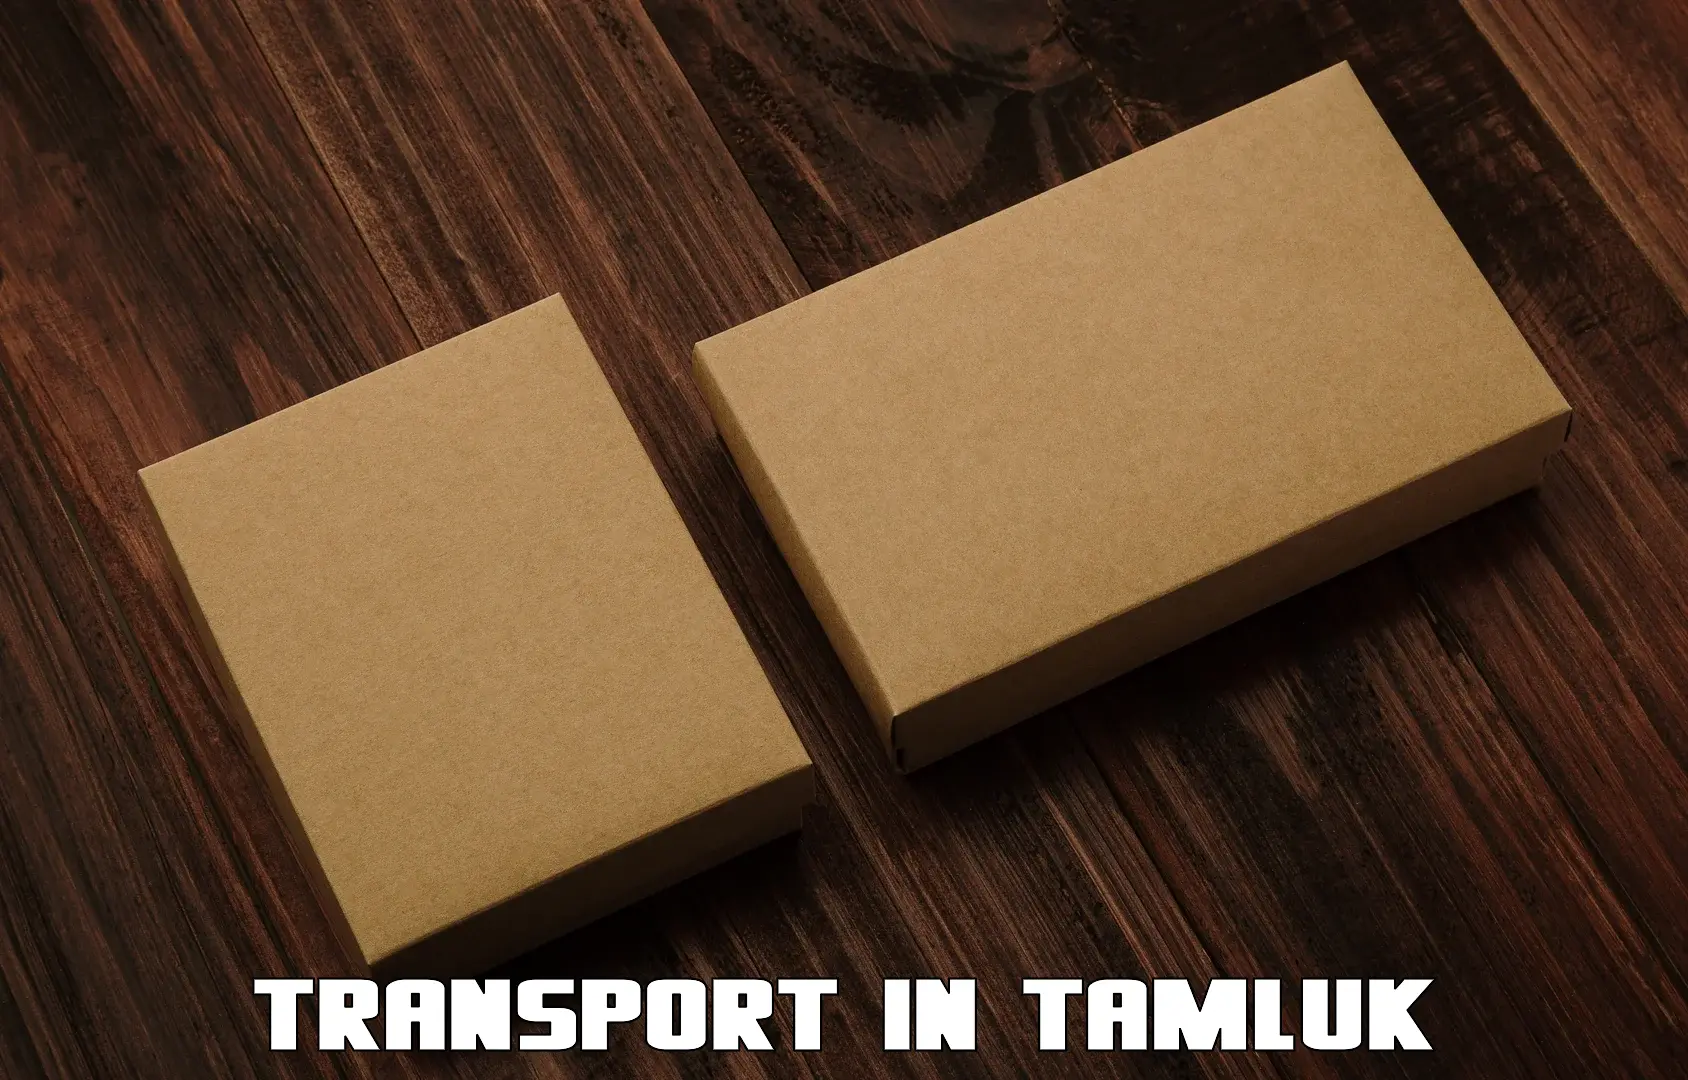 Intercity transport in Tamluk